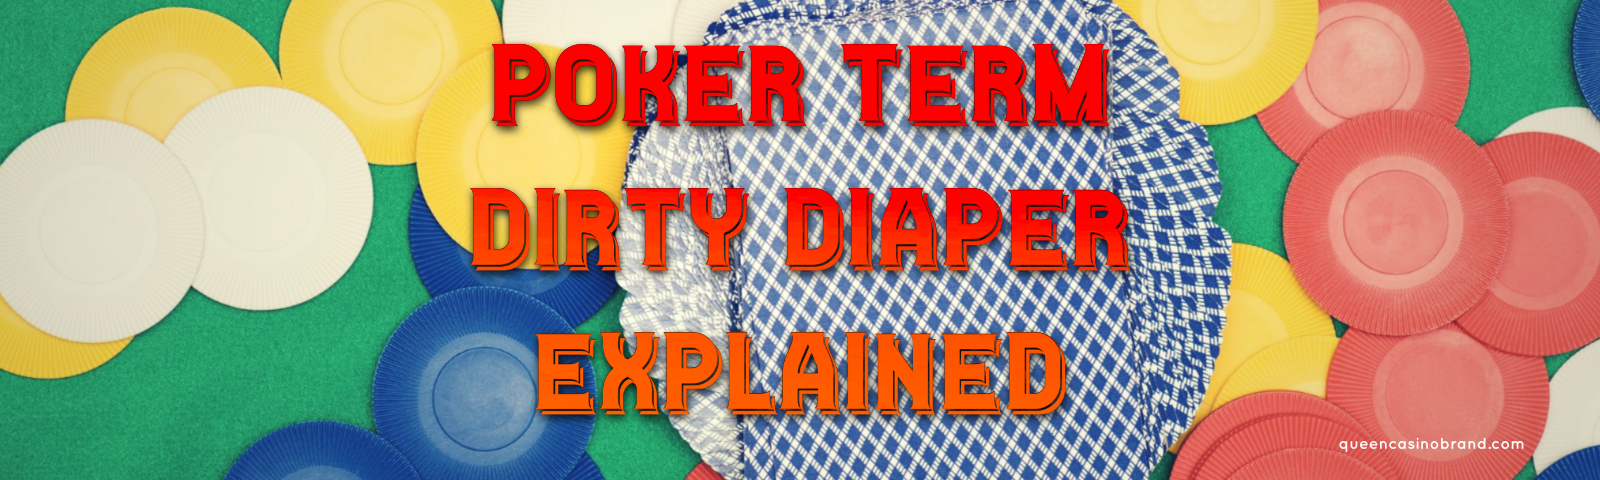 Poker Term Dirty Diaper Explained - Queen Casino Brand